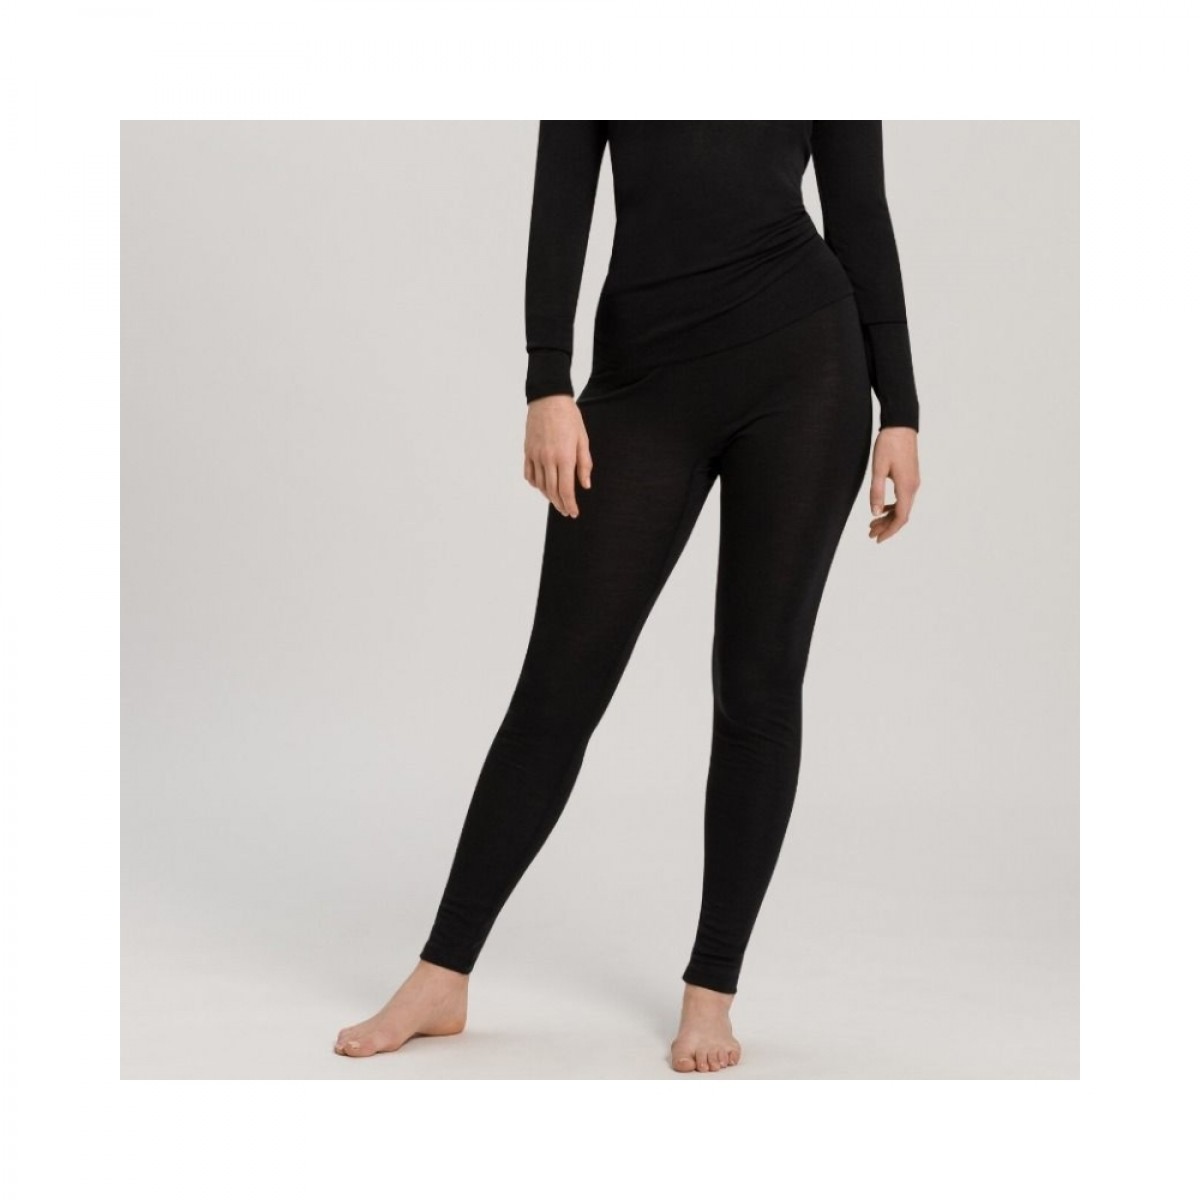 woolen silk leggins - black - model front